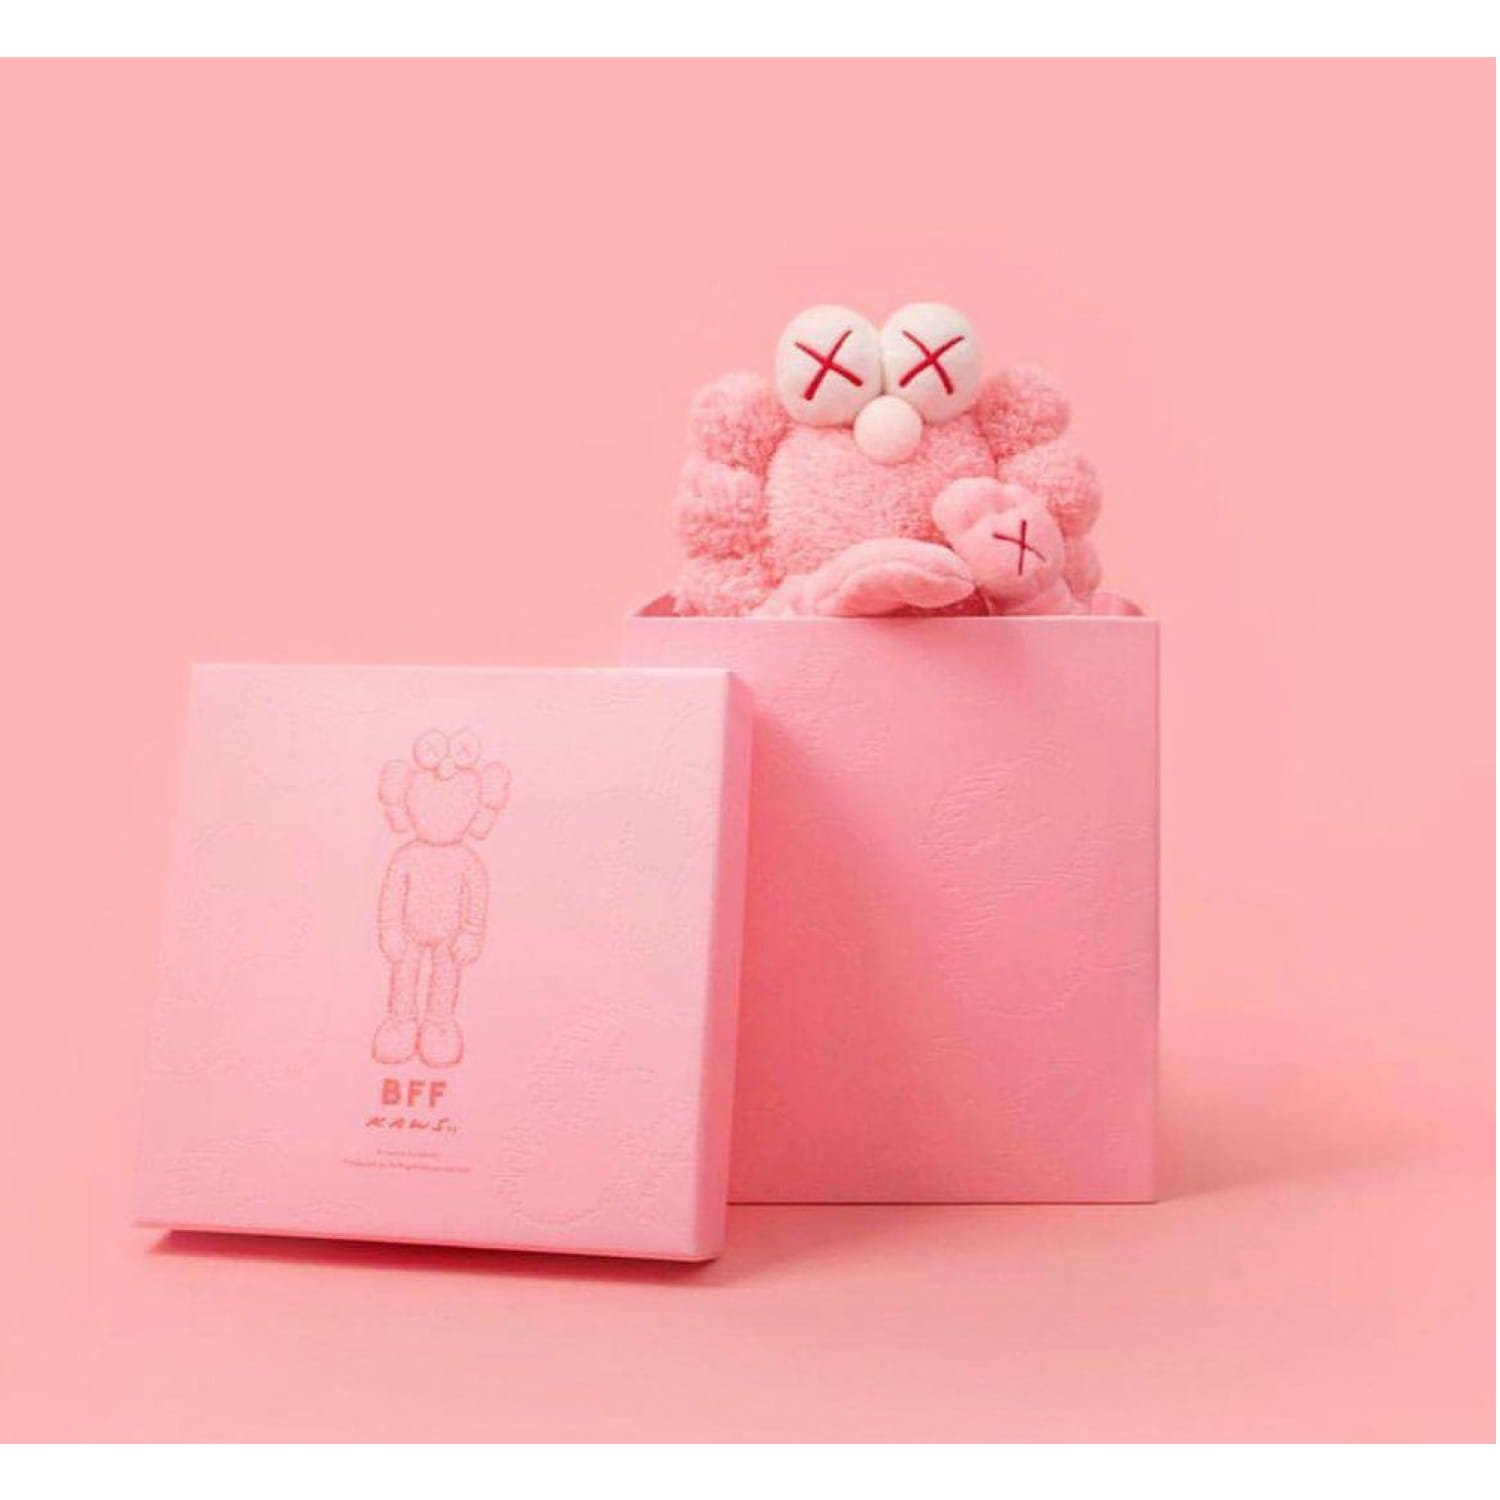 Bearbrick supreme  Pink christmas gifts, Kaws iphone wallpaper